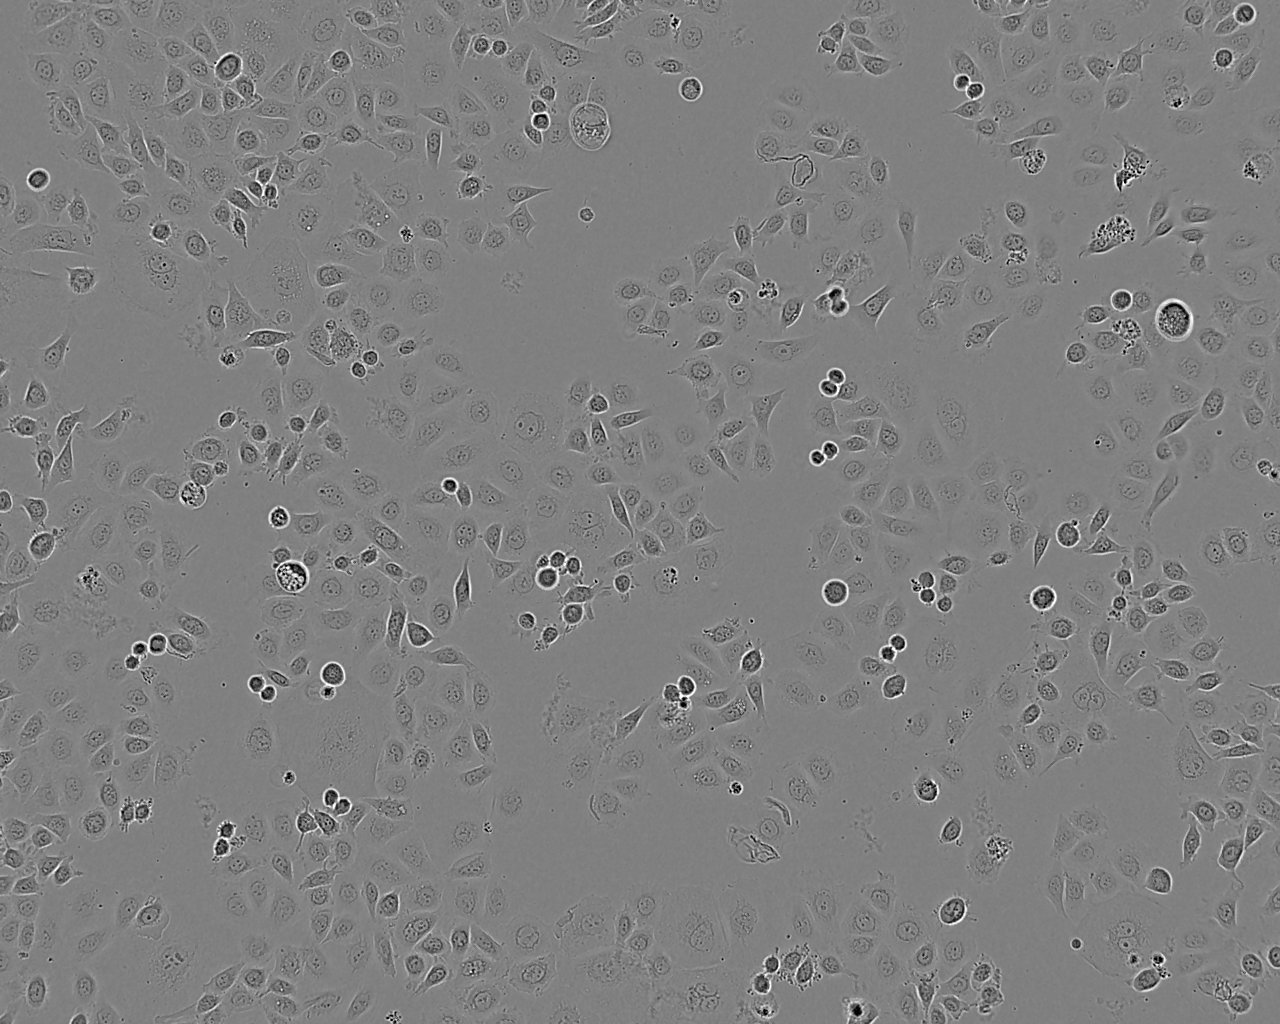 NRK epithelioid cells大鼠肾细胞系